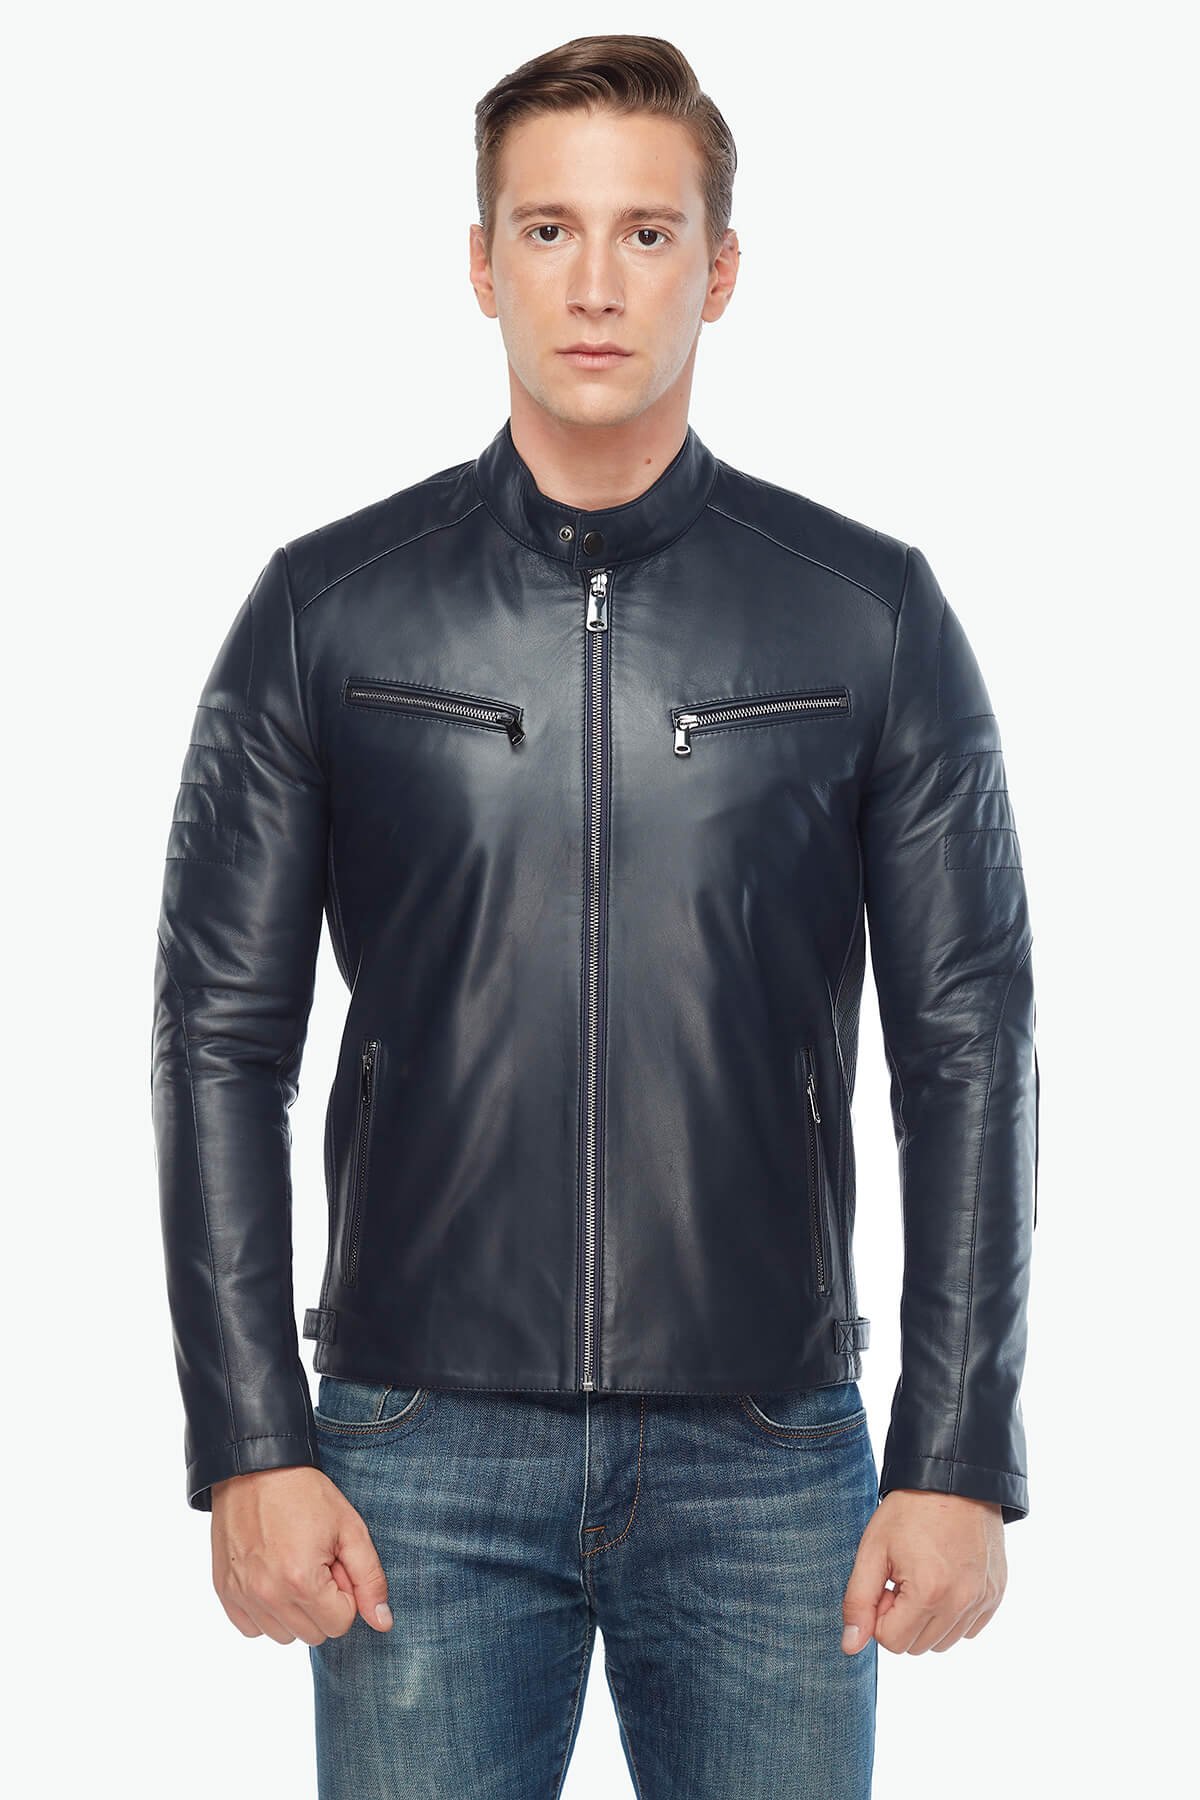 Brando Men's Sports Leather Jacket Navy Blue